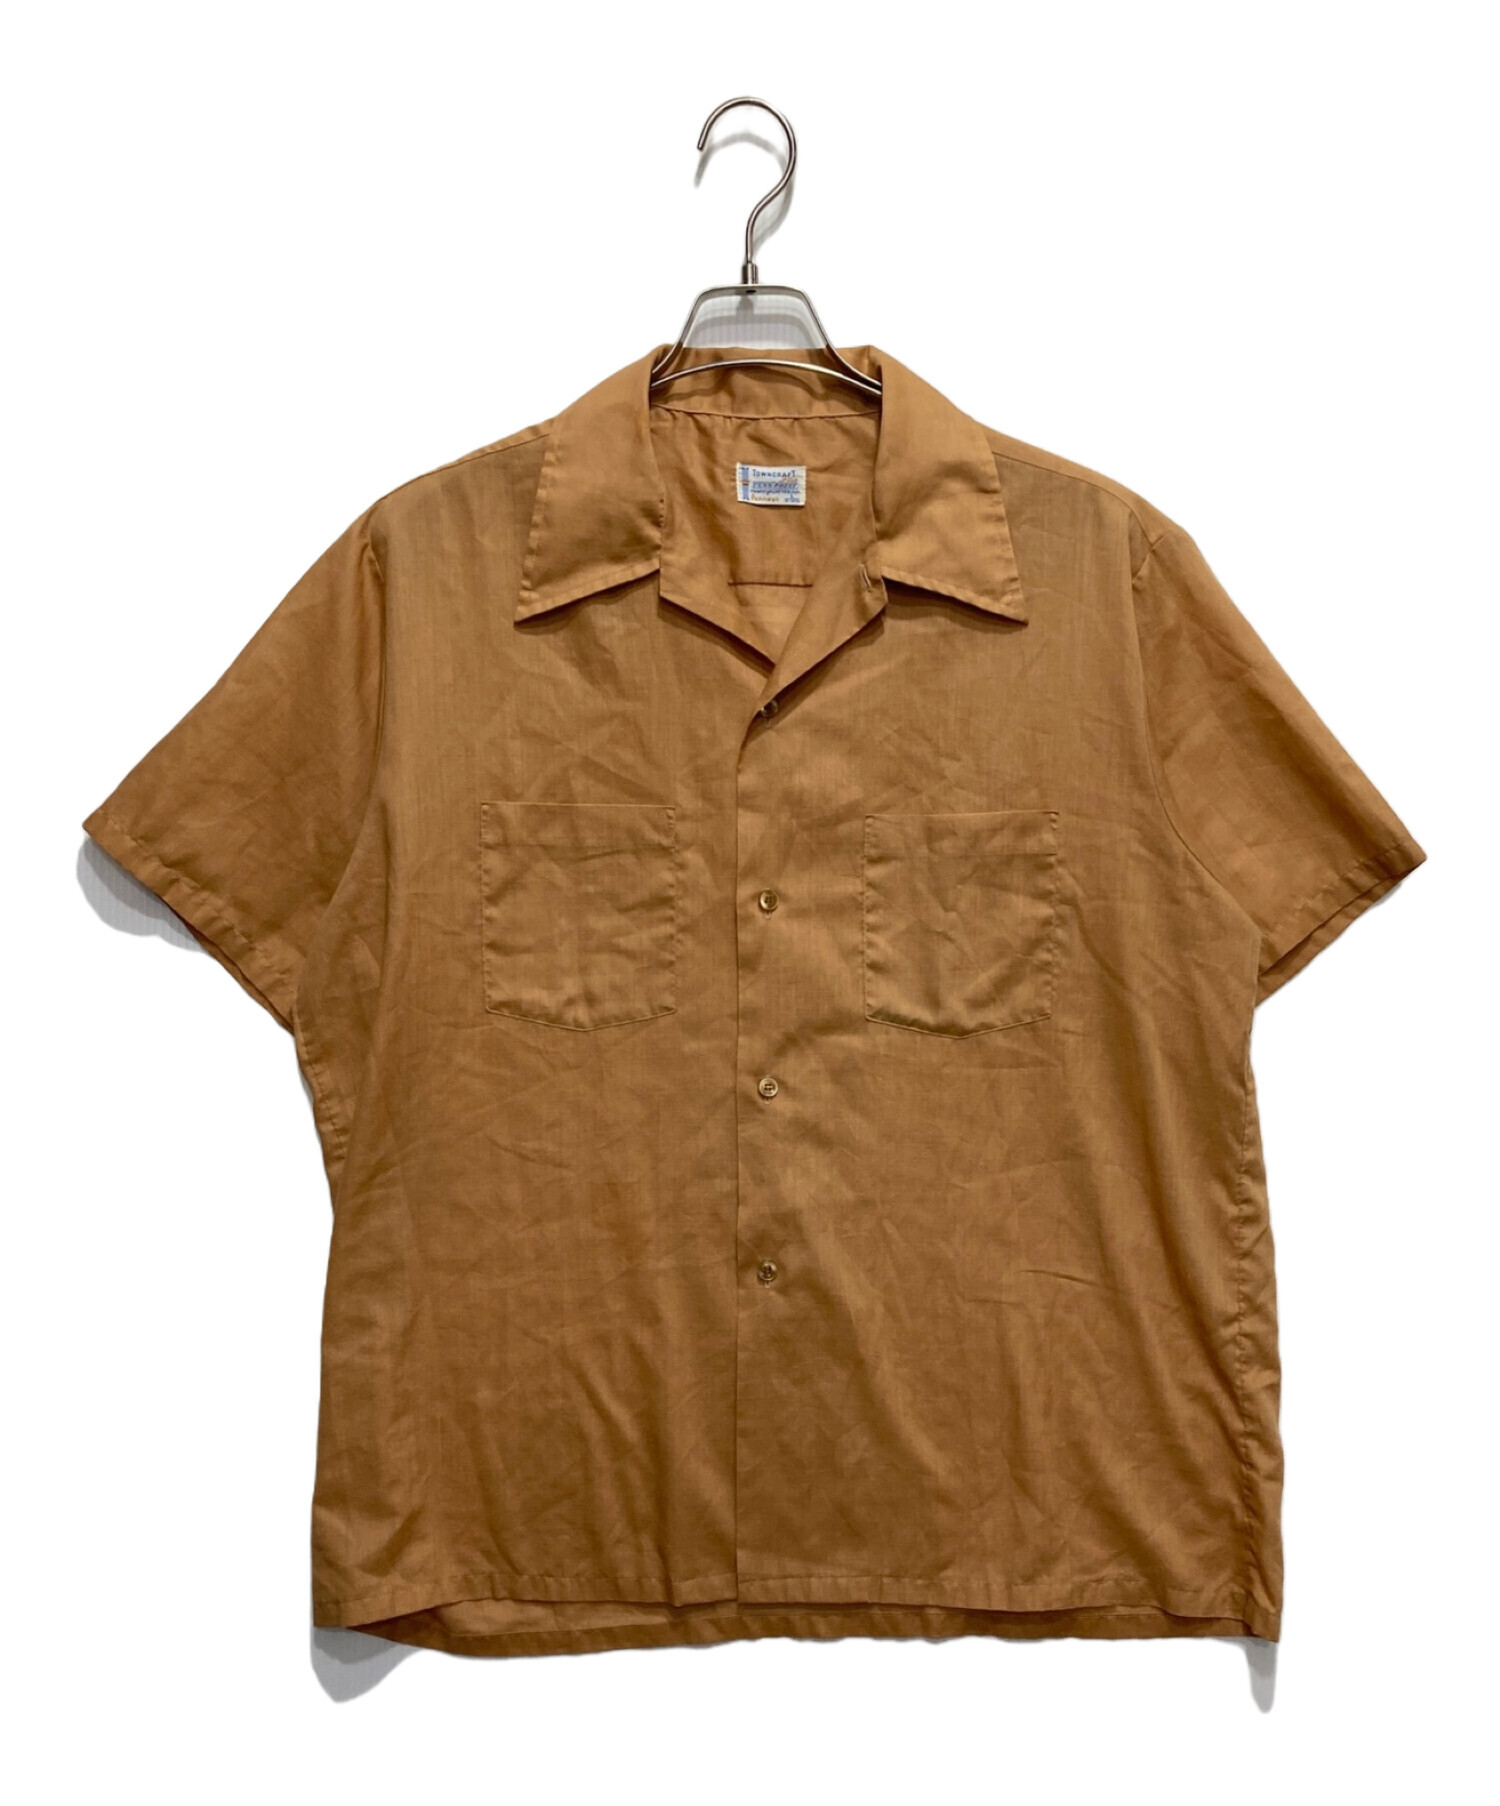 TOWN CRAFT (タウンクラフト) ヴィンテージシャツ オレンジ サイズ:L